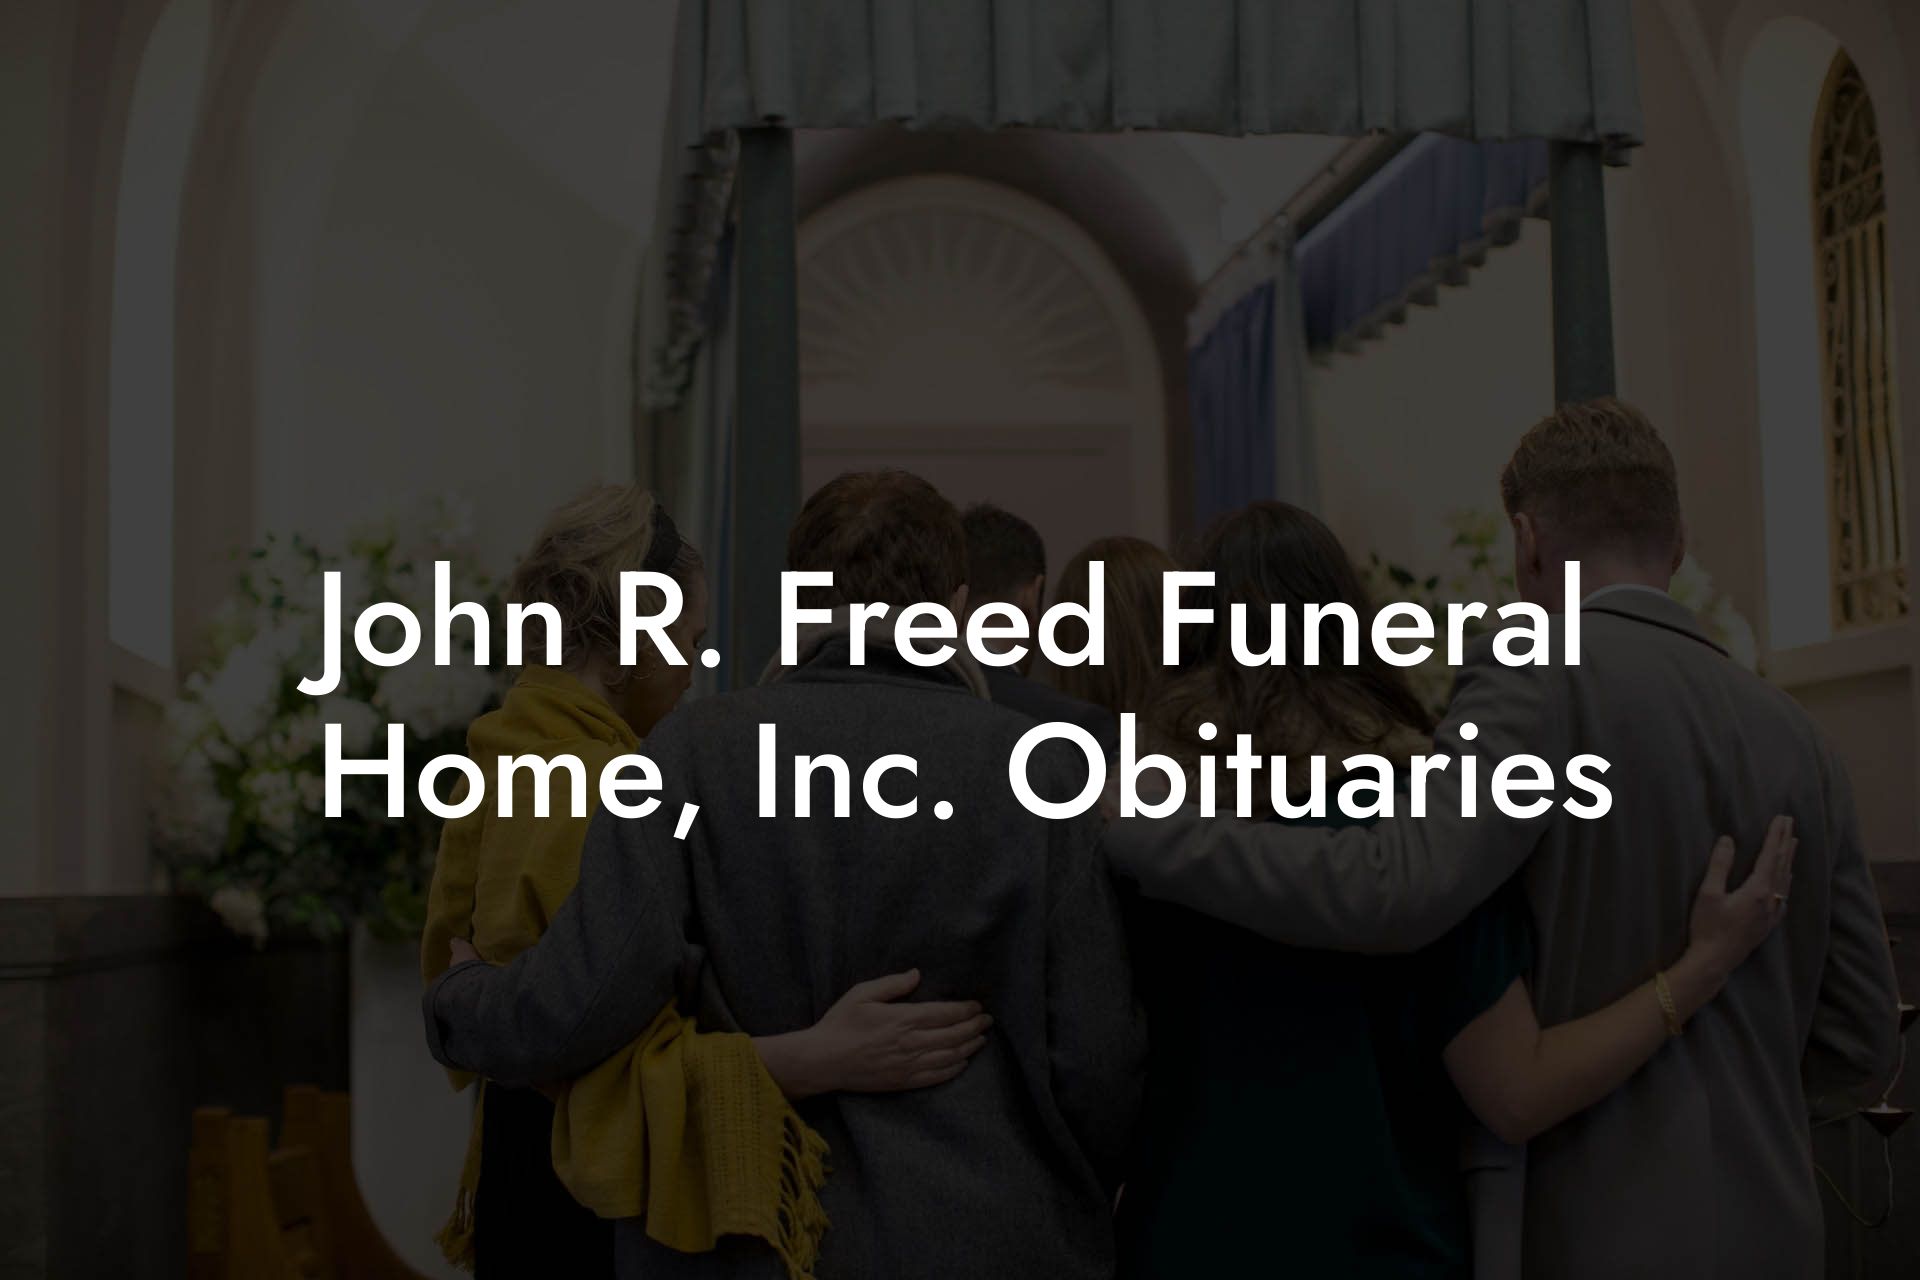 John R. Freed Funeral Home, Inc. Obituaries